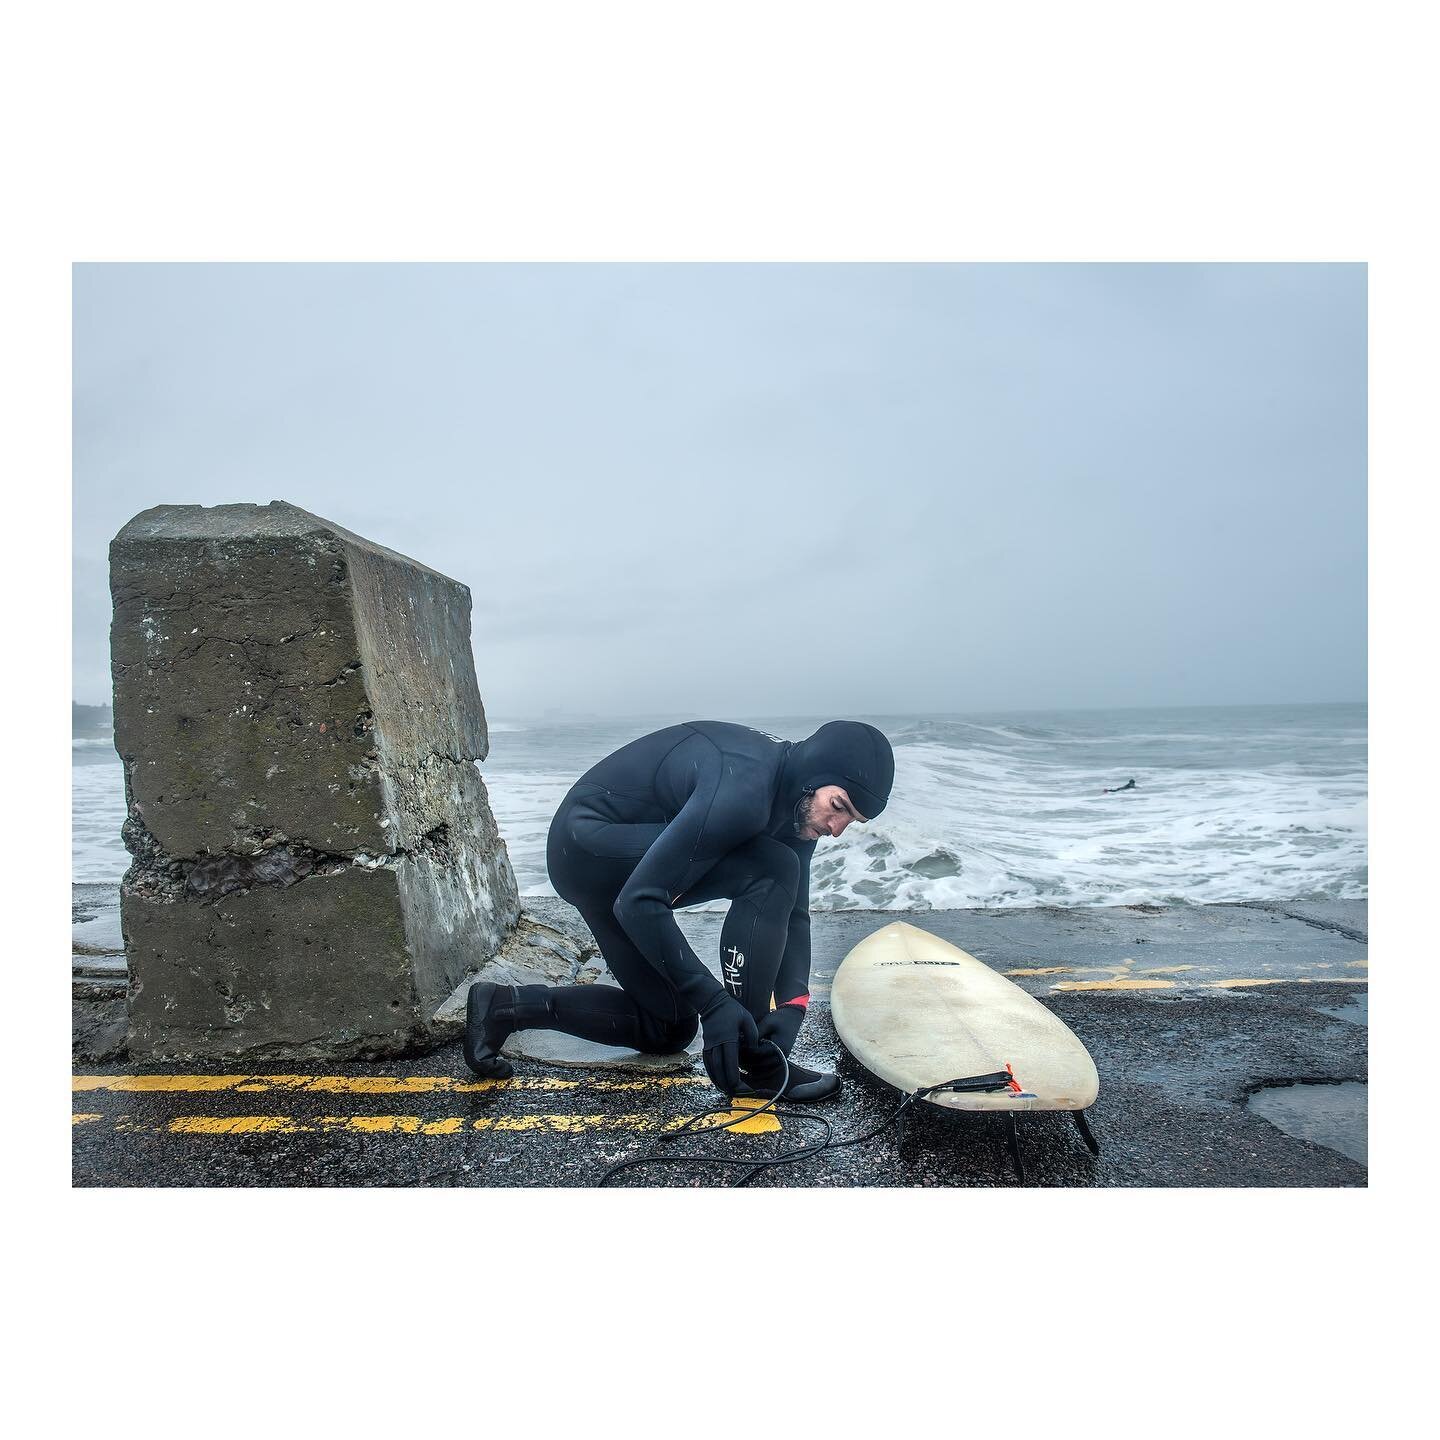 Oct 23 - Surfing storm Babet - Hopeman, Scotland. 

@pressandjournal #surfing #stormbabet #scotland #moray #surfersofinstagram #visitscotland #painterly #photography #instagram #shinyhappystreet #woofermagazine #street_me_up #fromstreetswithlove #unp